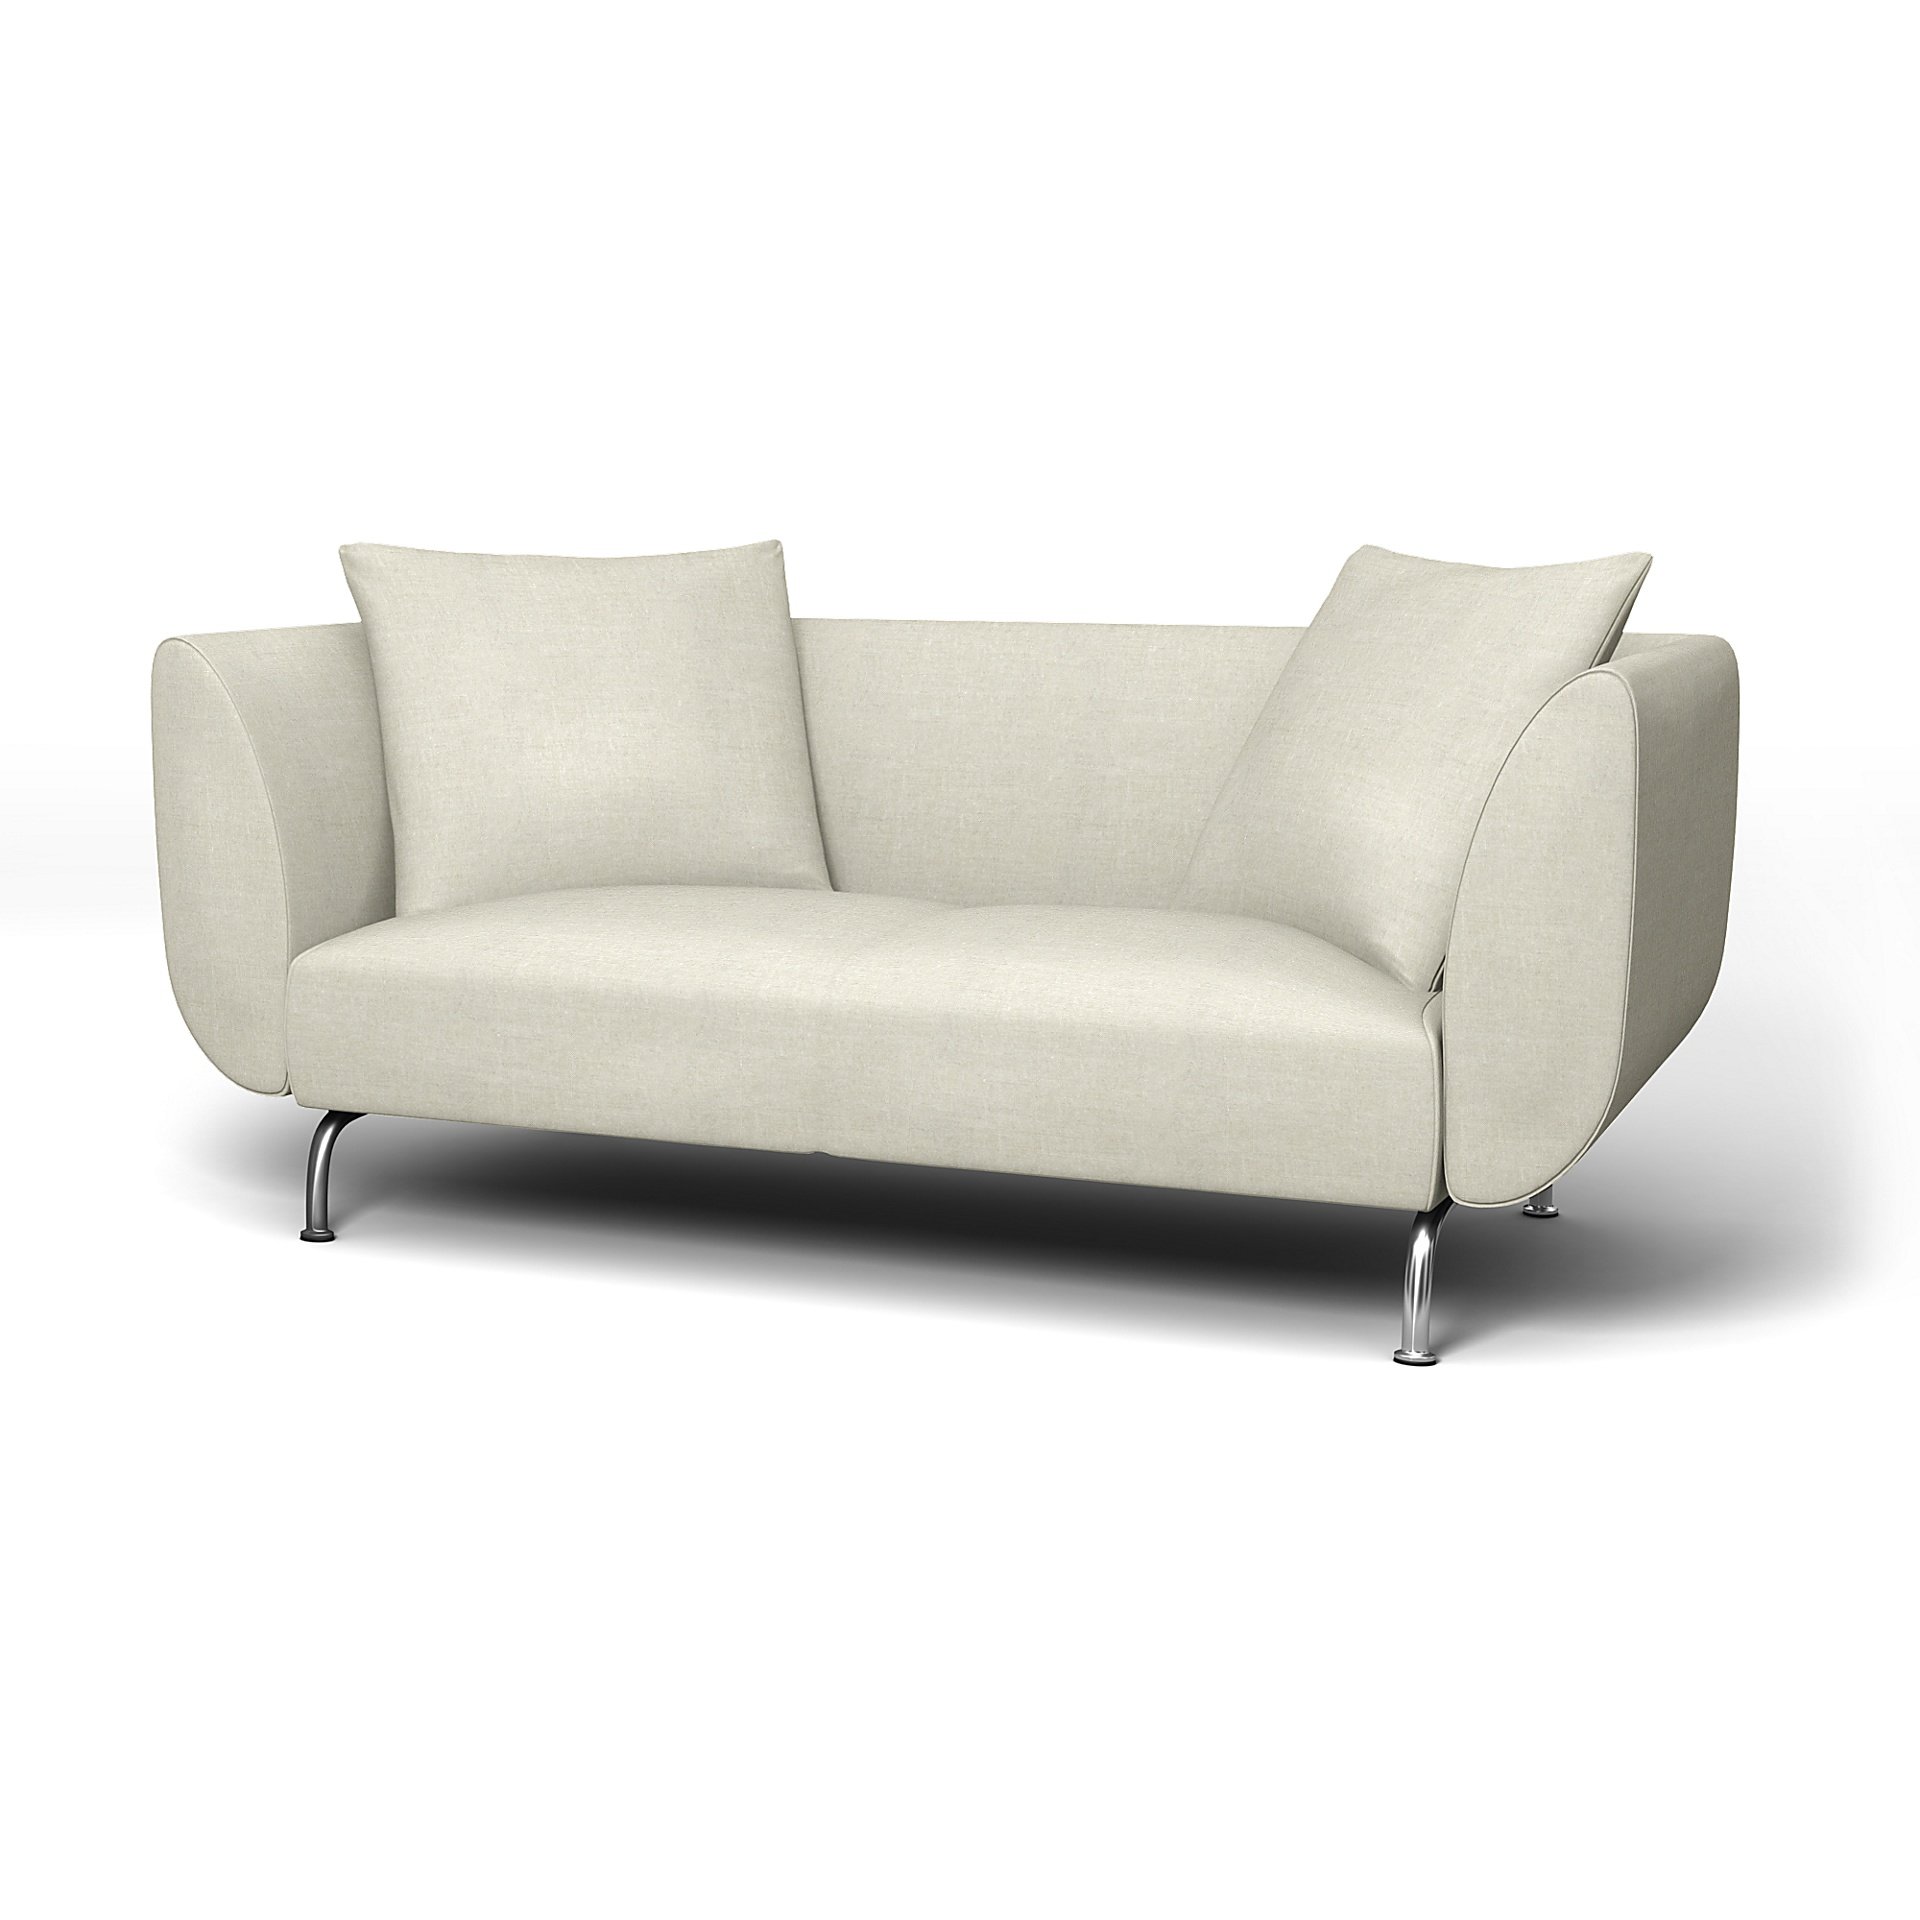 IKEA - Stromstad 2 Seater Sofa Cover, Natural, Linen - Bemz